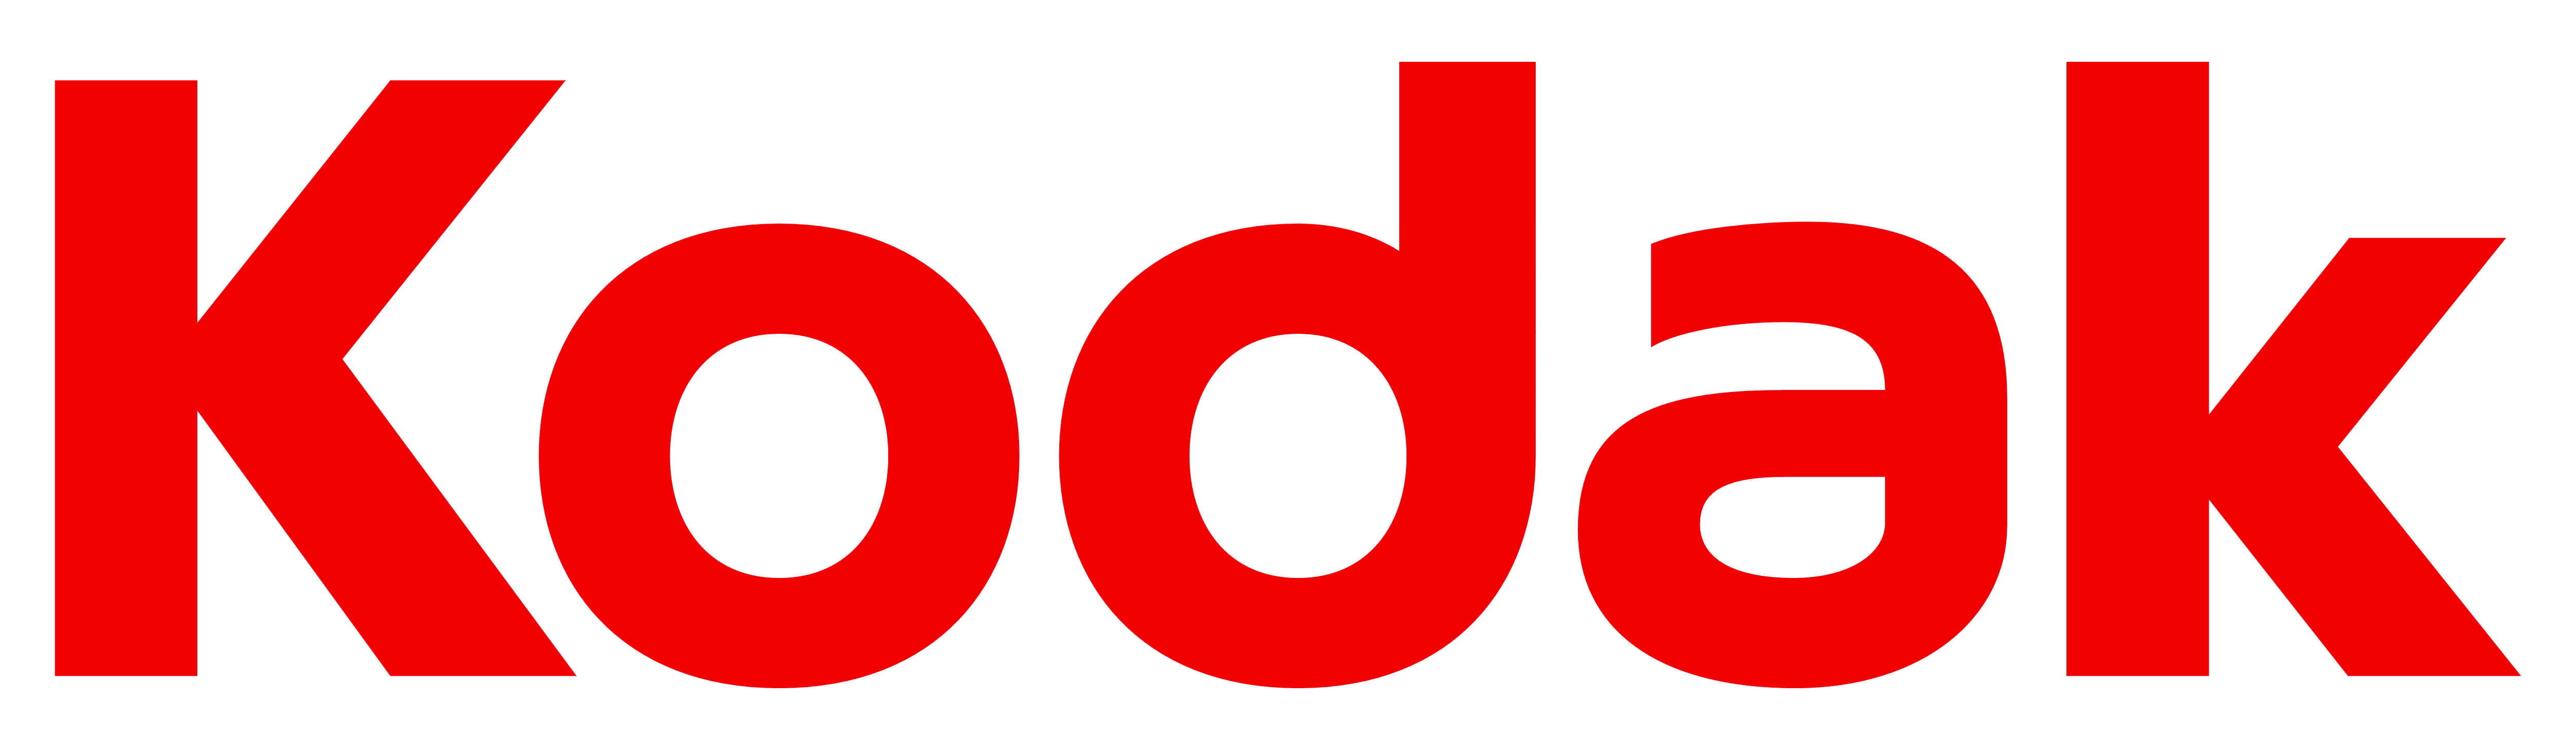 Kodak®